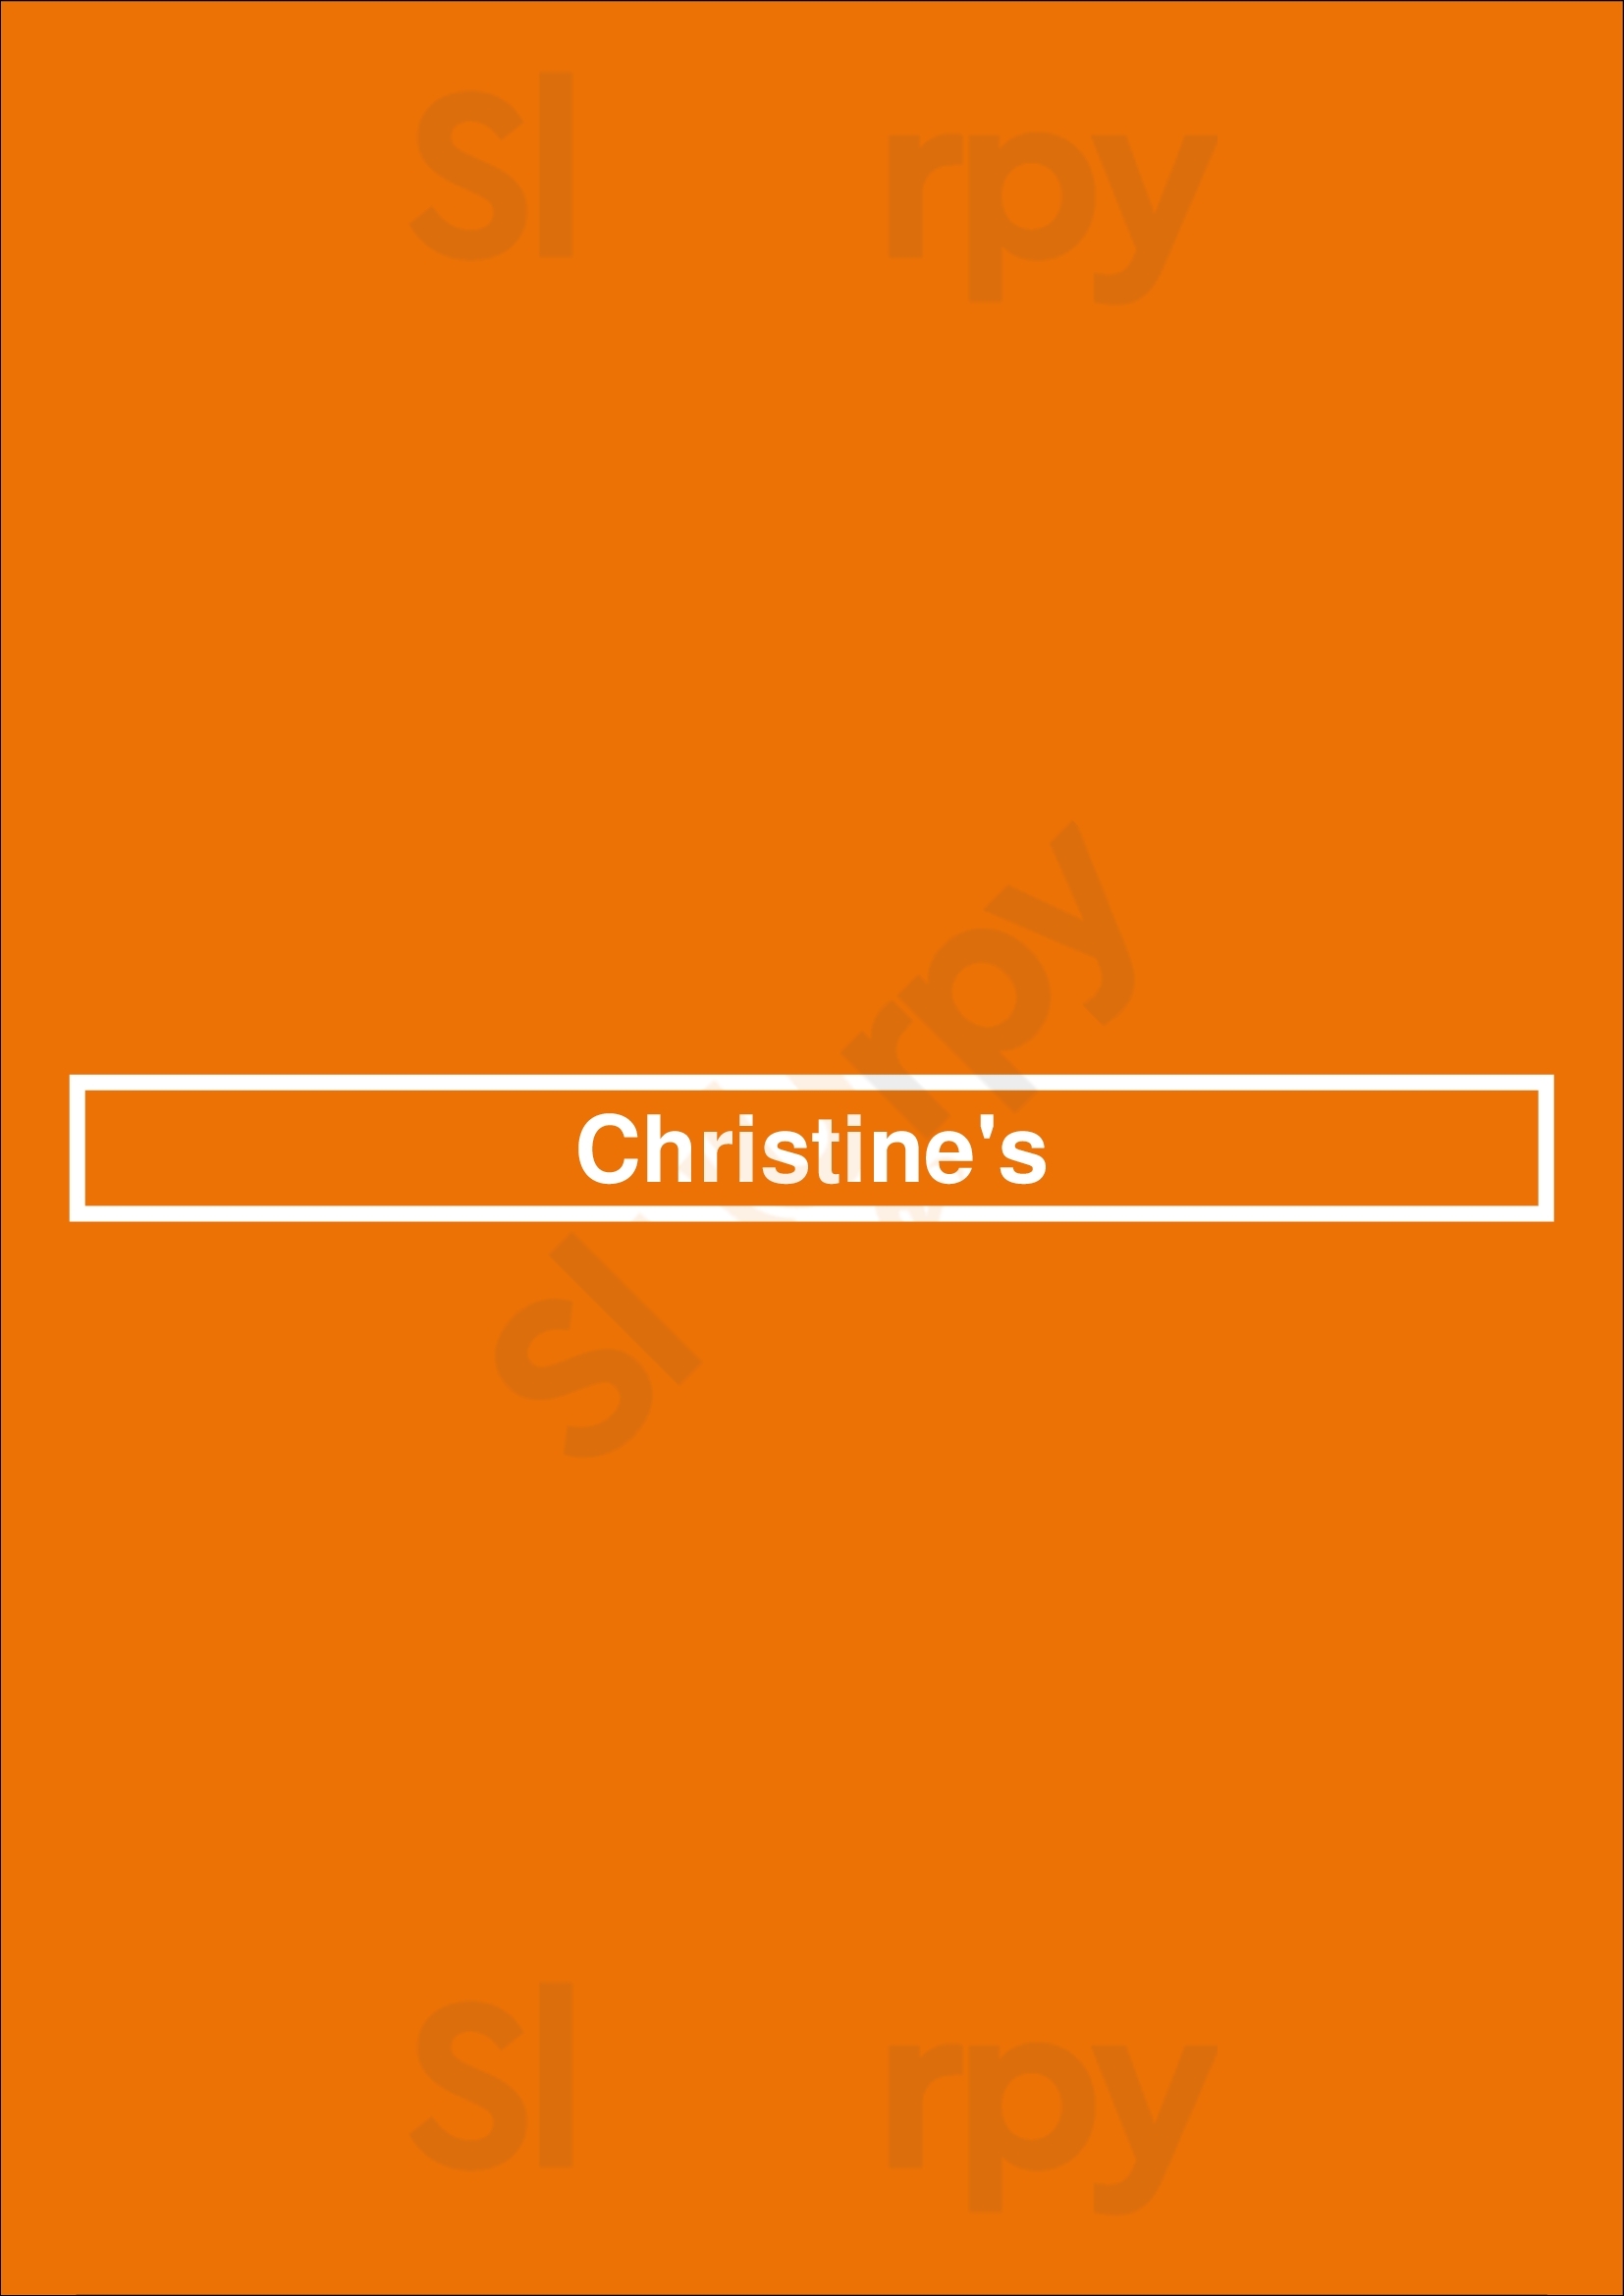 Christine's Cincinnati Menu - 1